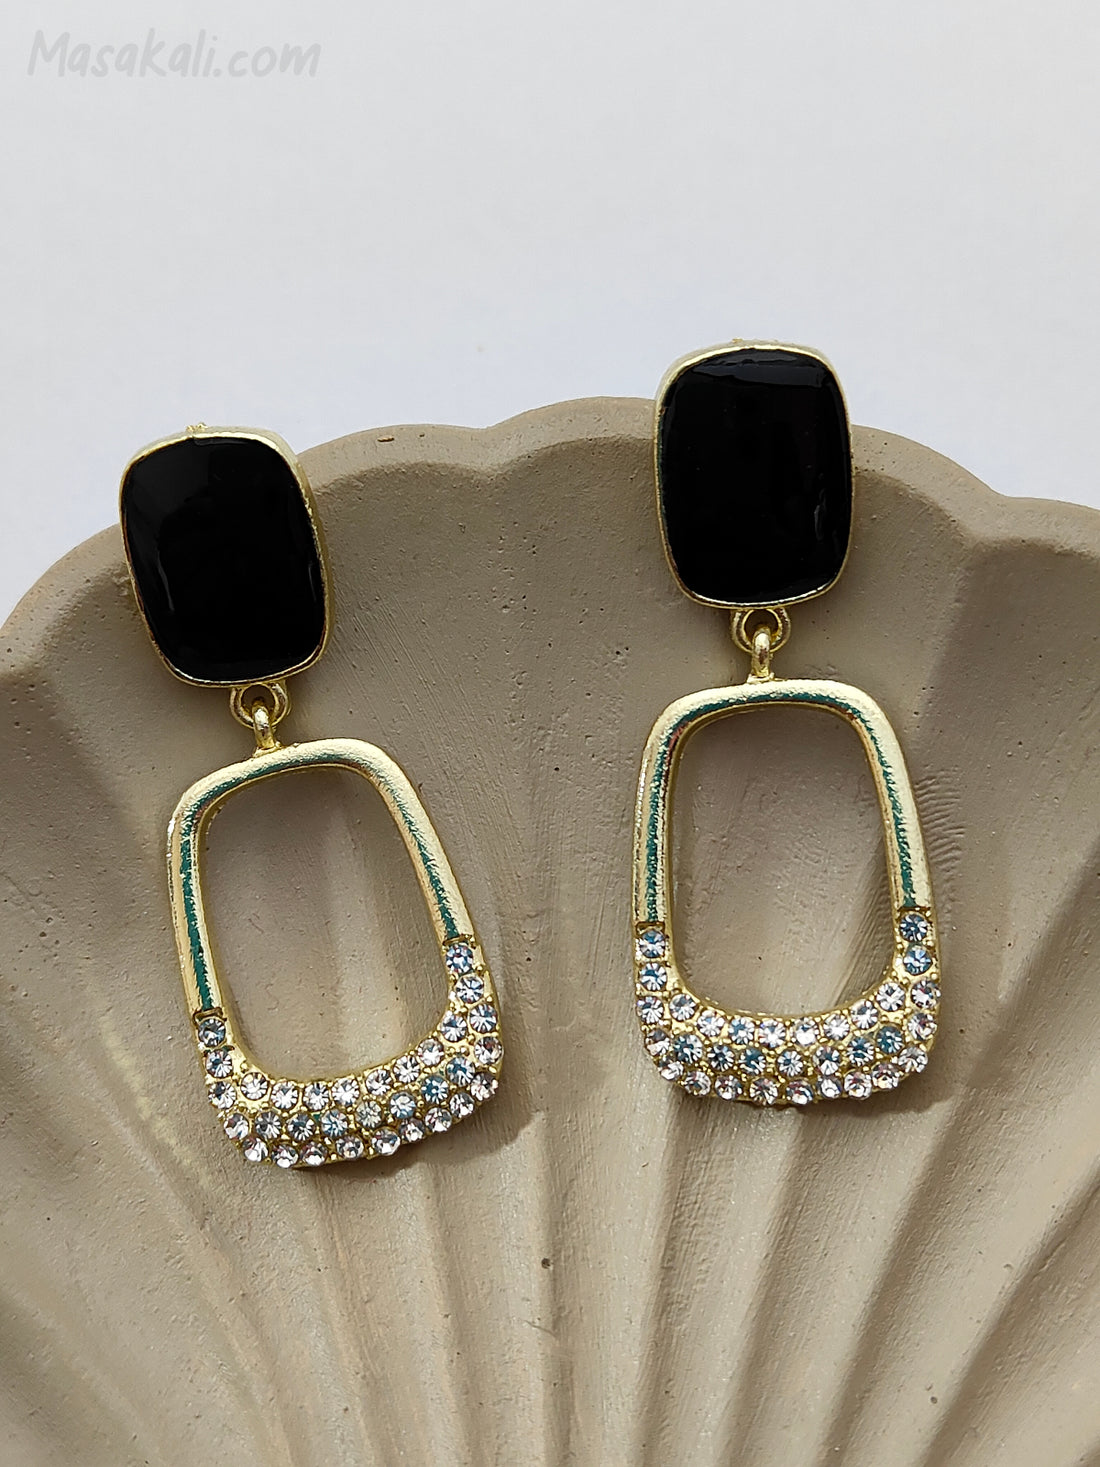 Masakali Gold Toned Rhinestone Statement Earrings Studded Drop Black Retro Style Korean Earrings